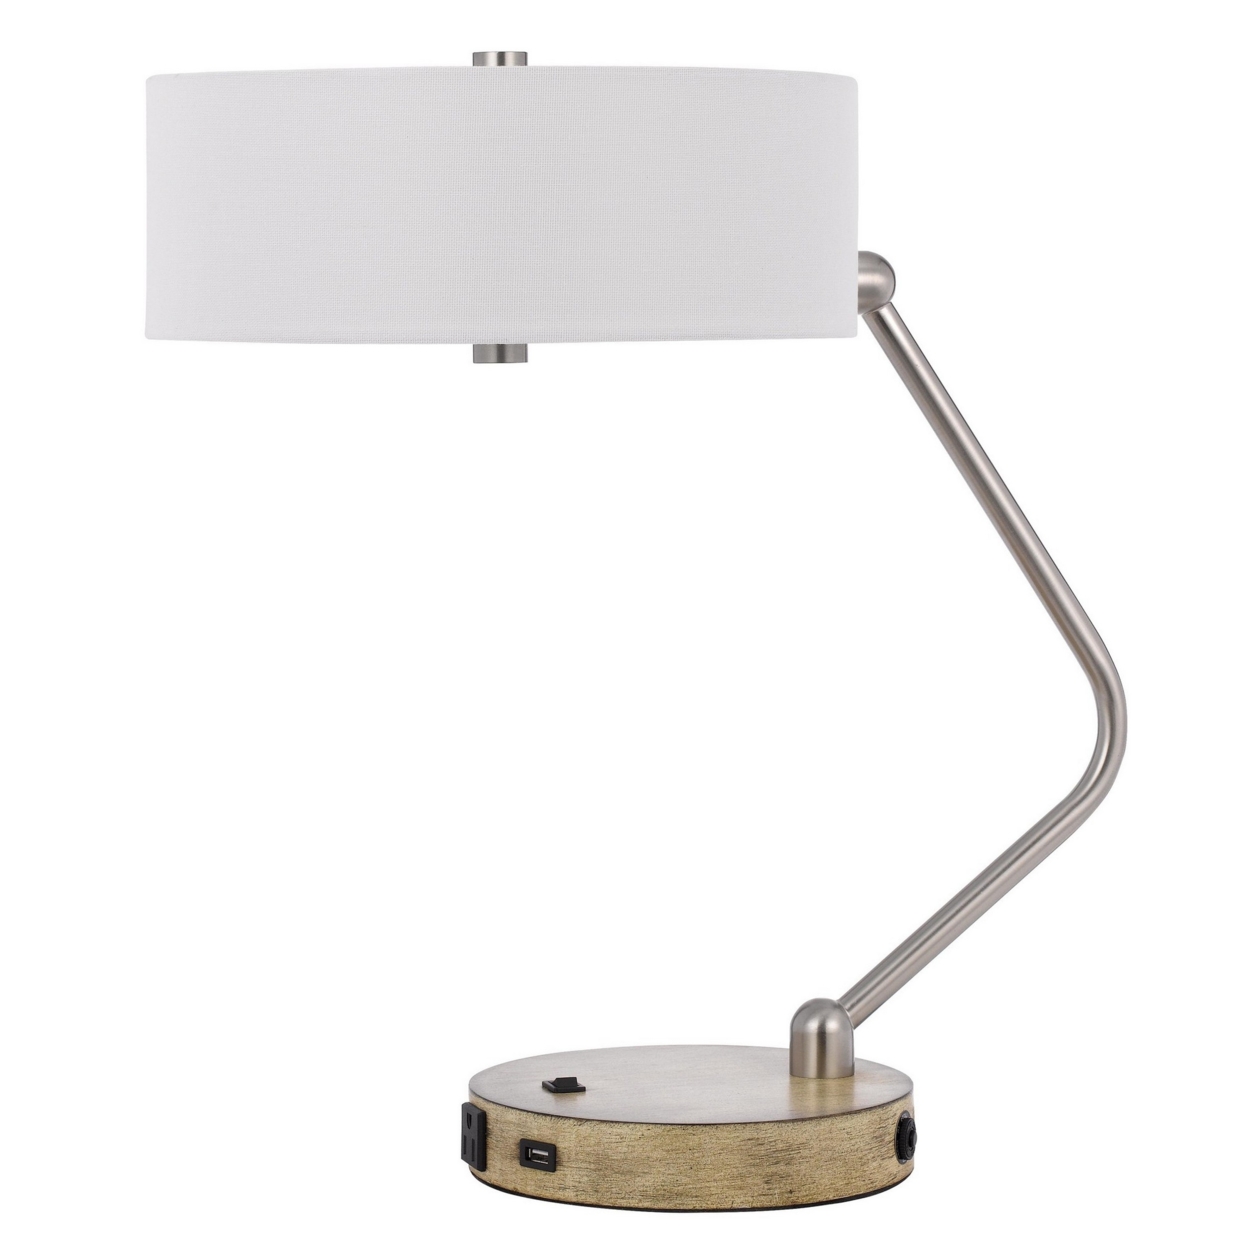 20 Inch Metal Angled Desk Lamp, 1 Type C USB Charging Port, Brown, Steel- Saltoro Sherpi